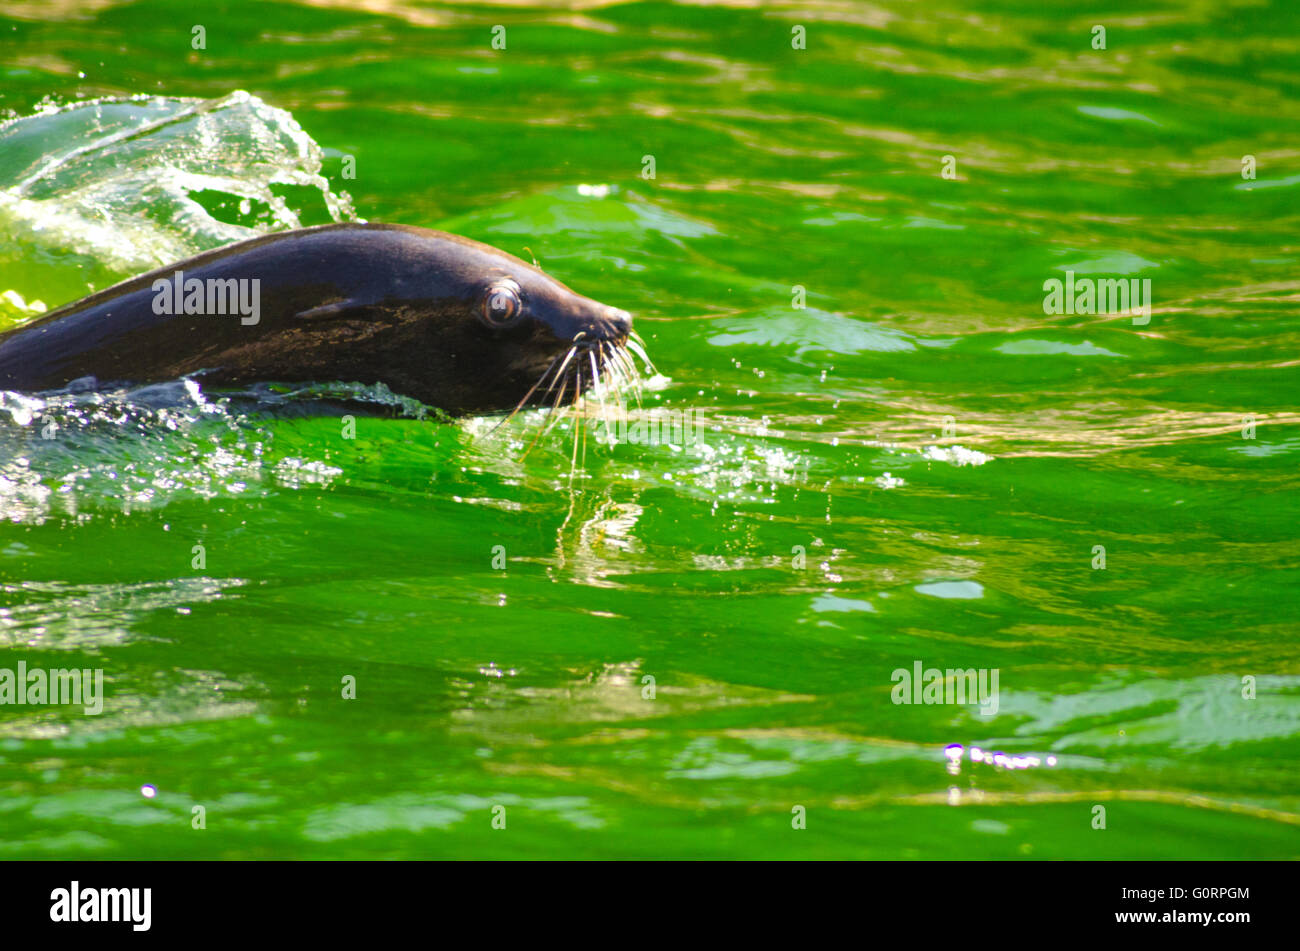 Seal swimming in green water Stock Photo